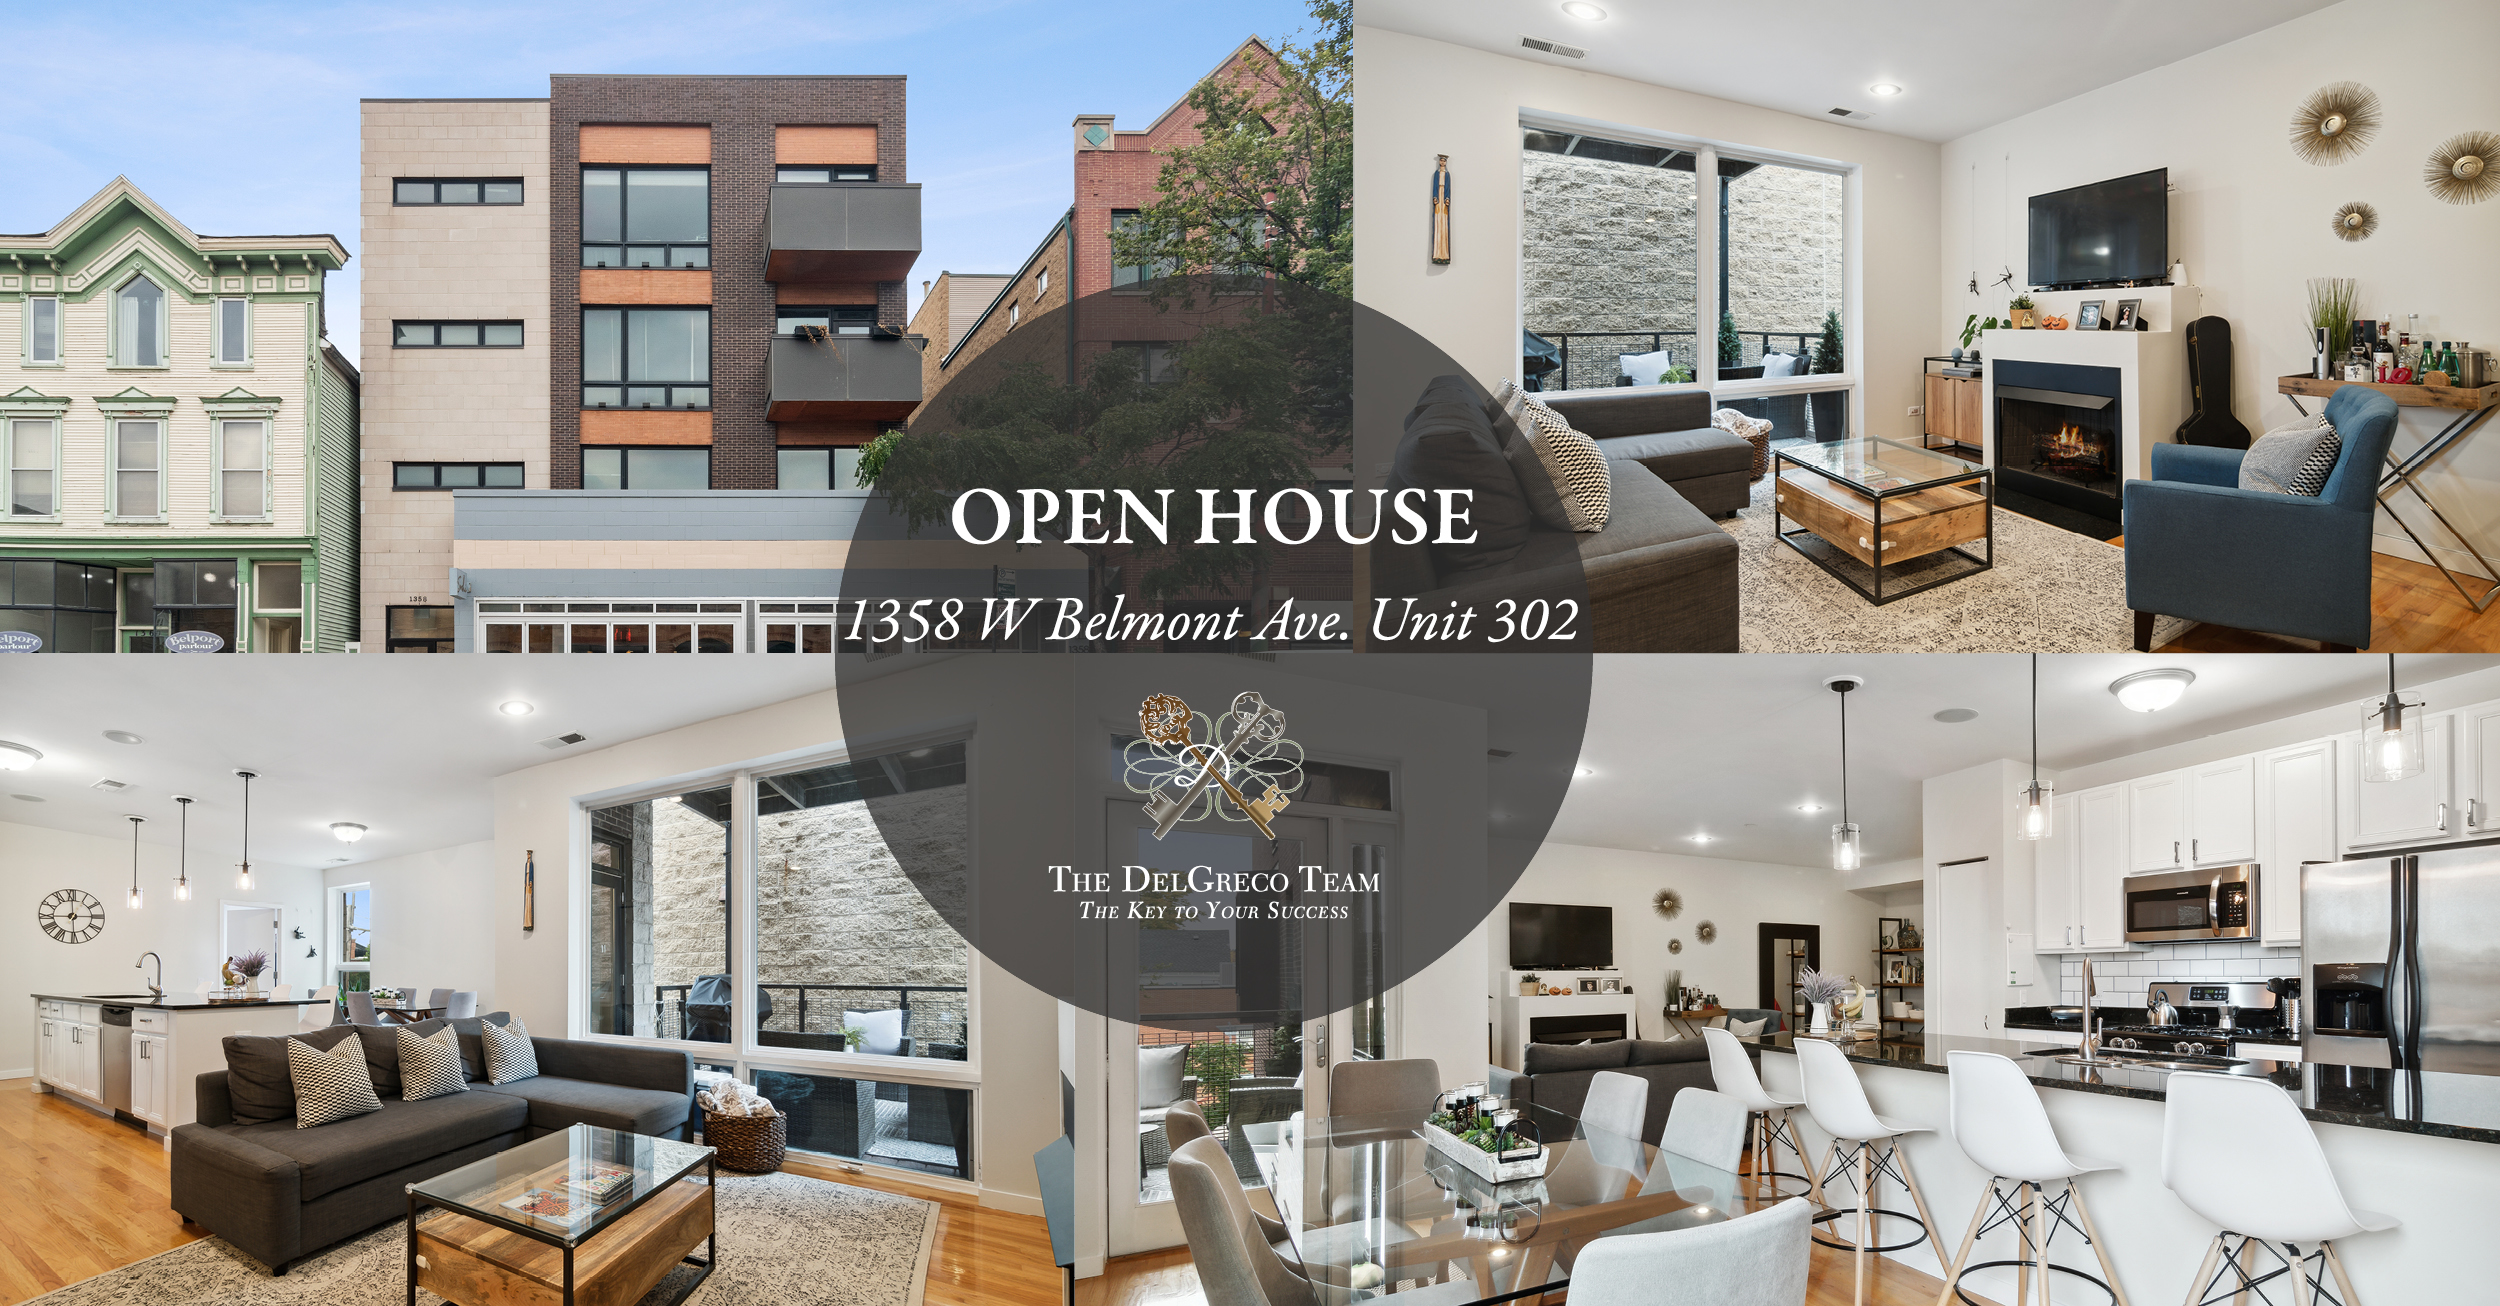 Lakeview - 1358 West Belmont Avenue Unit 302, Chicago, IL 60657 - Instagram Link for The DelGreco Team Open House